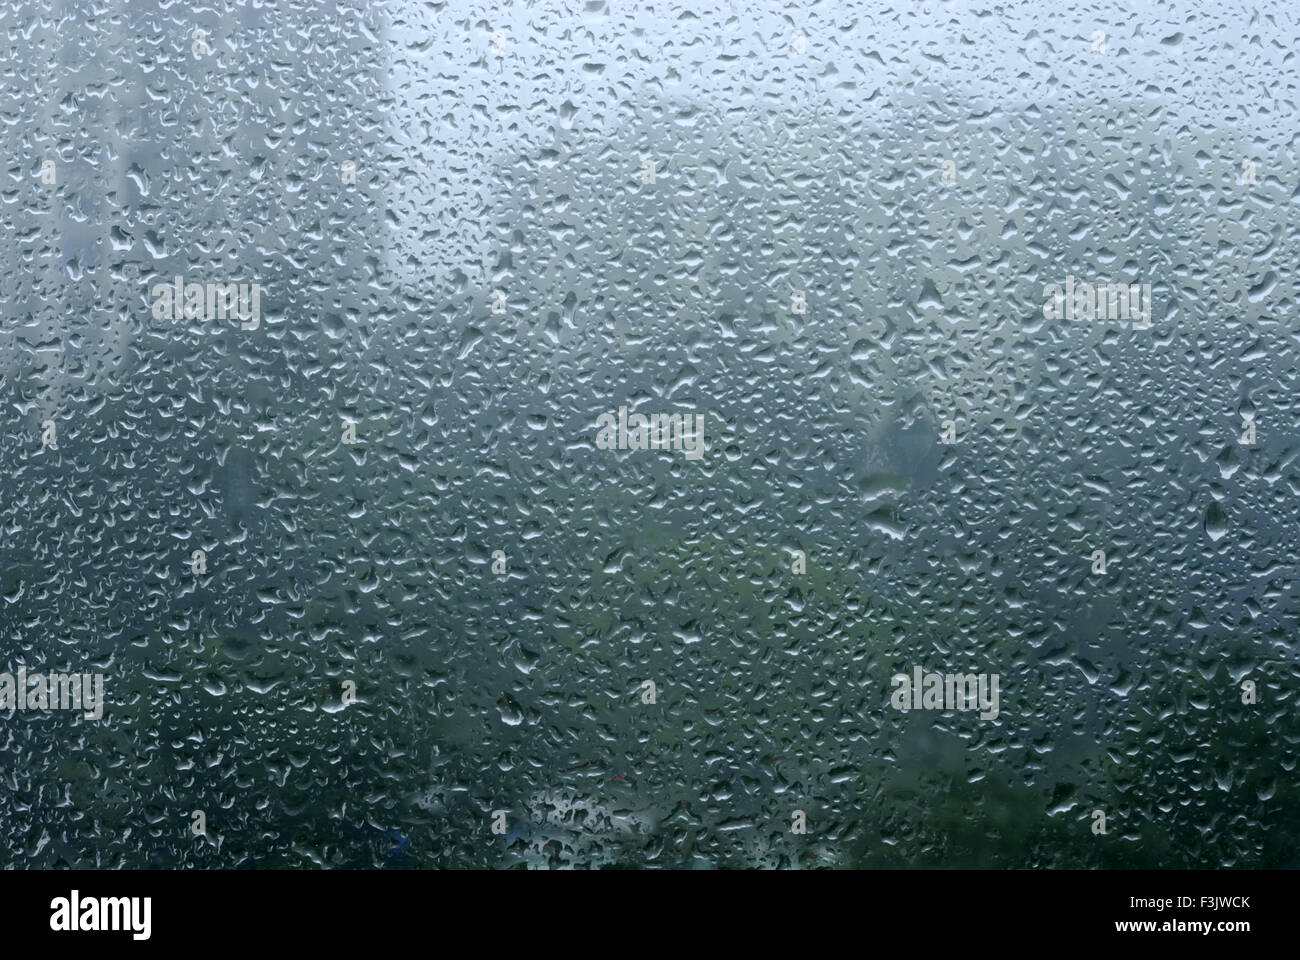 Drops of rain water on window glass Stock Photo